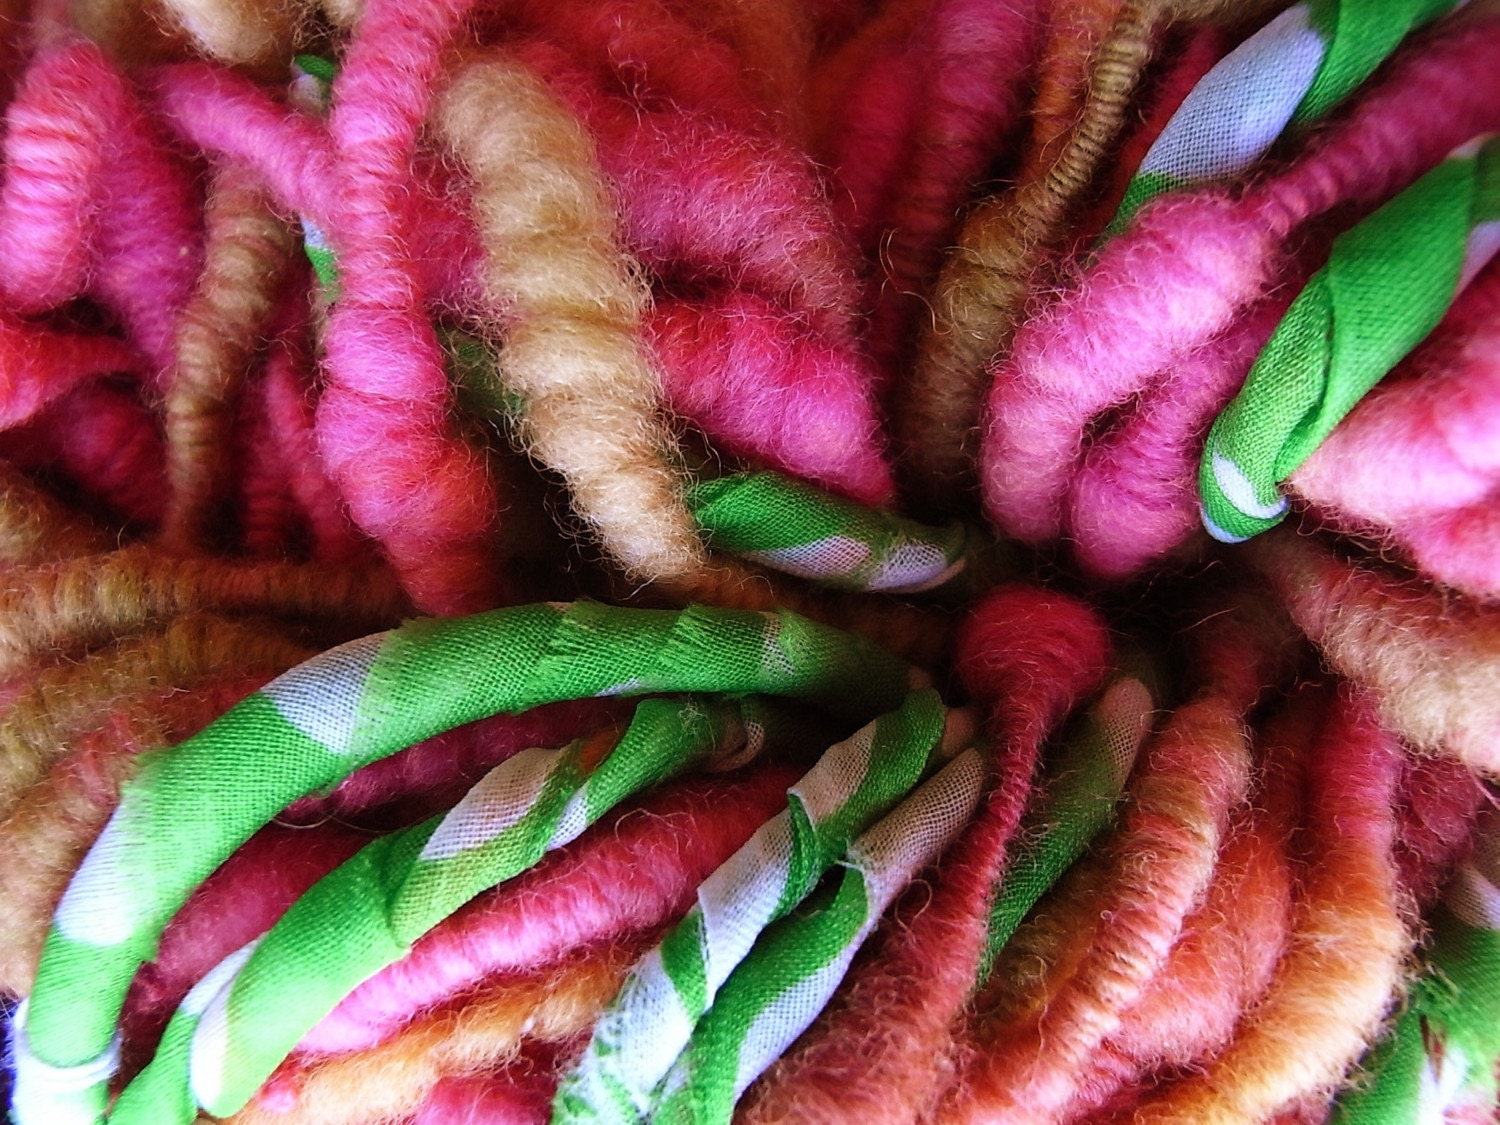 Imokuri super twist slub handspun yarn in vibrant pinks, oranges and khakis 100g (01 10 6)